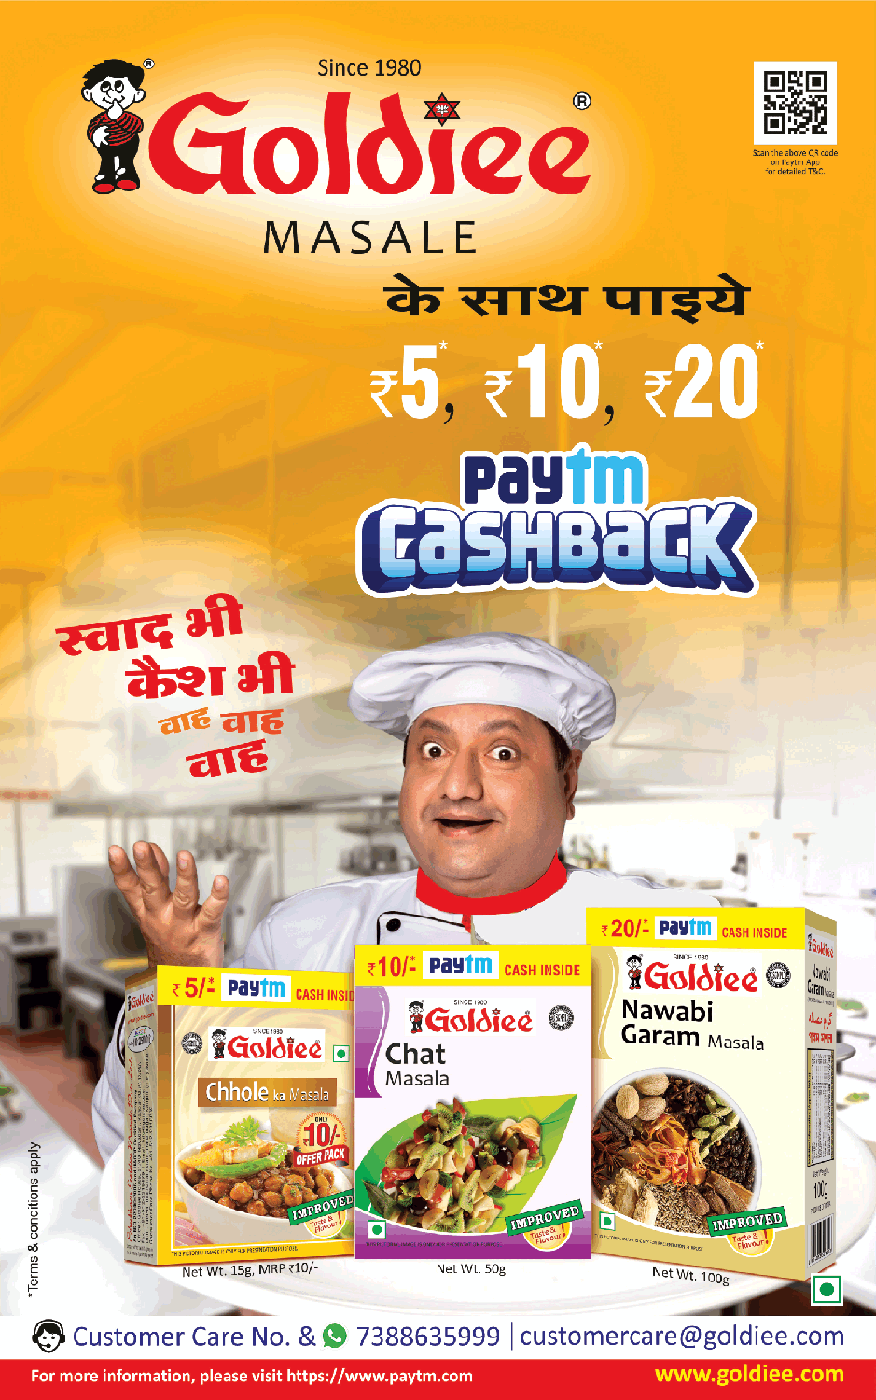 goldiee-masale-ke-sath-paye-5-10-20-rupee-ka-paytm-cashback-ad-times-of-india-jaipur-06-12-2018.png